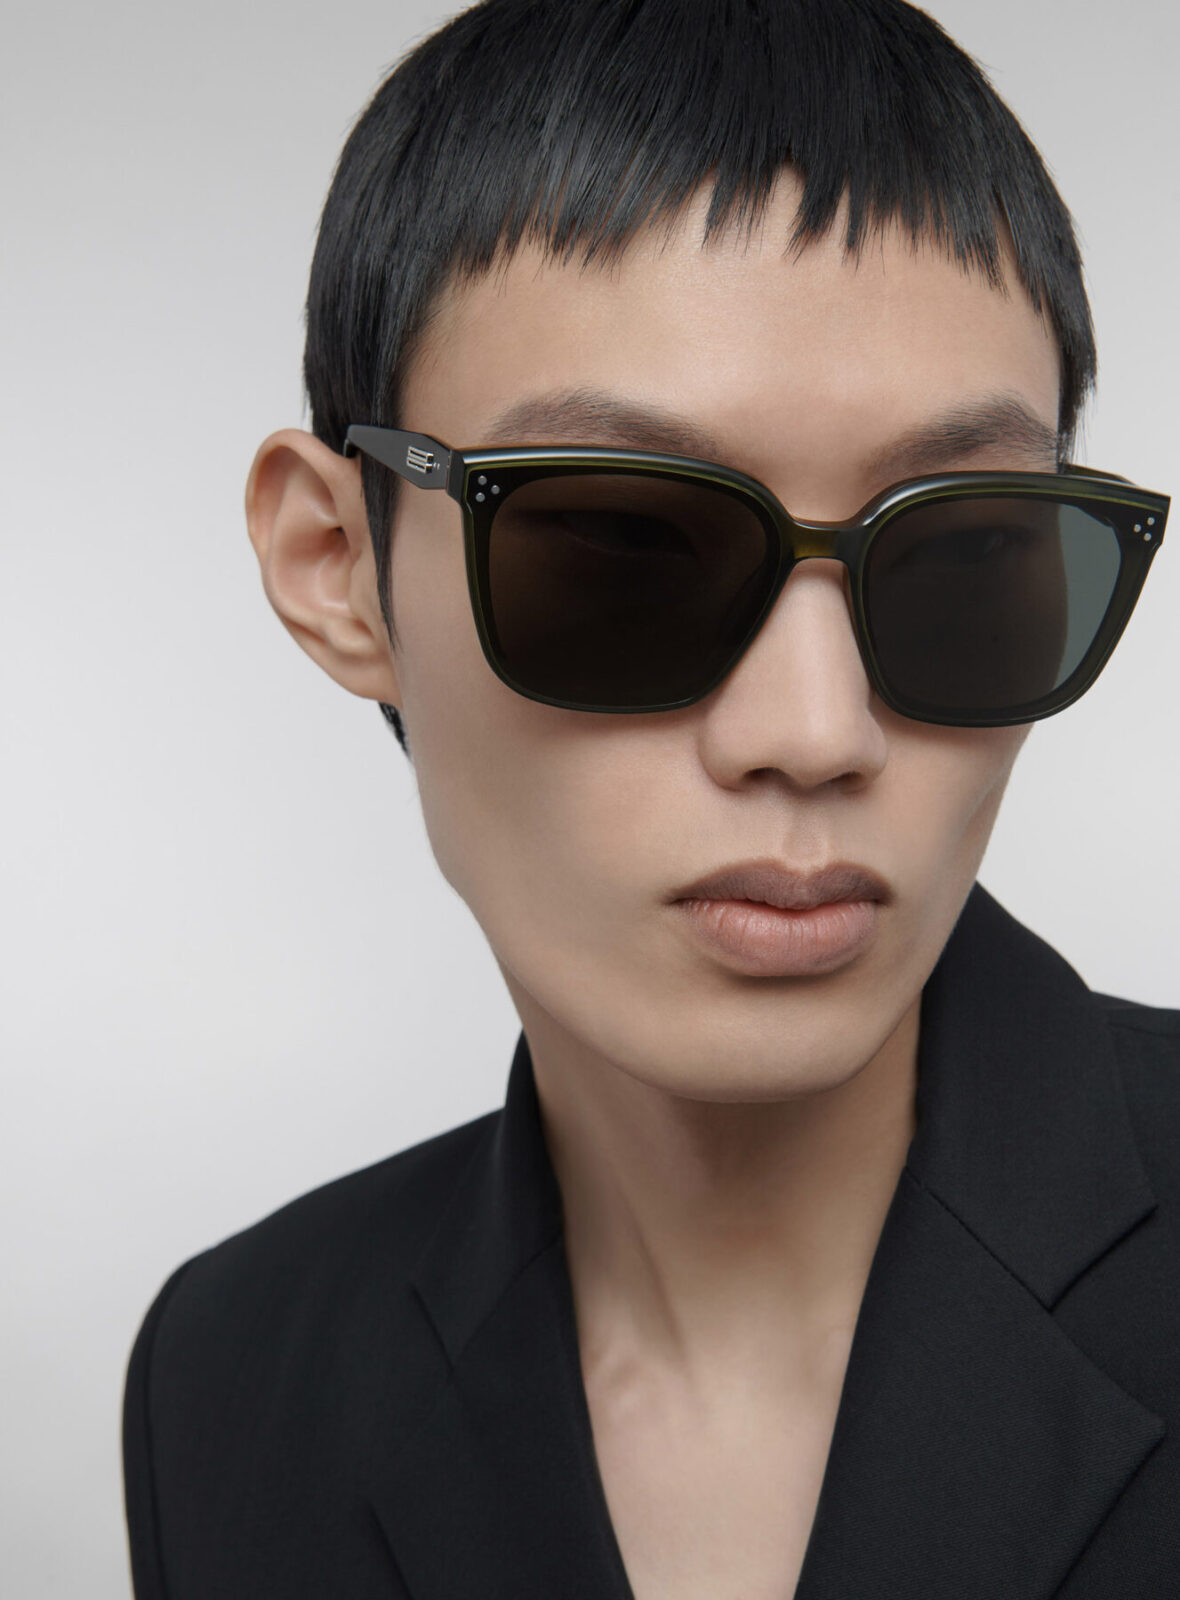 Gentle Monster Korea Blackpink Eyewear Trend Fashion Edgy Buy Online Glasses